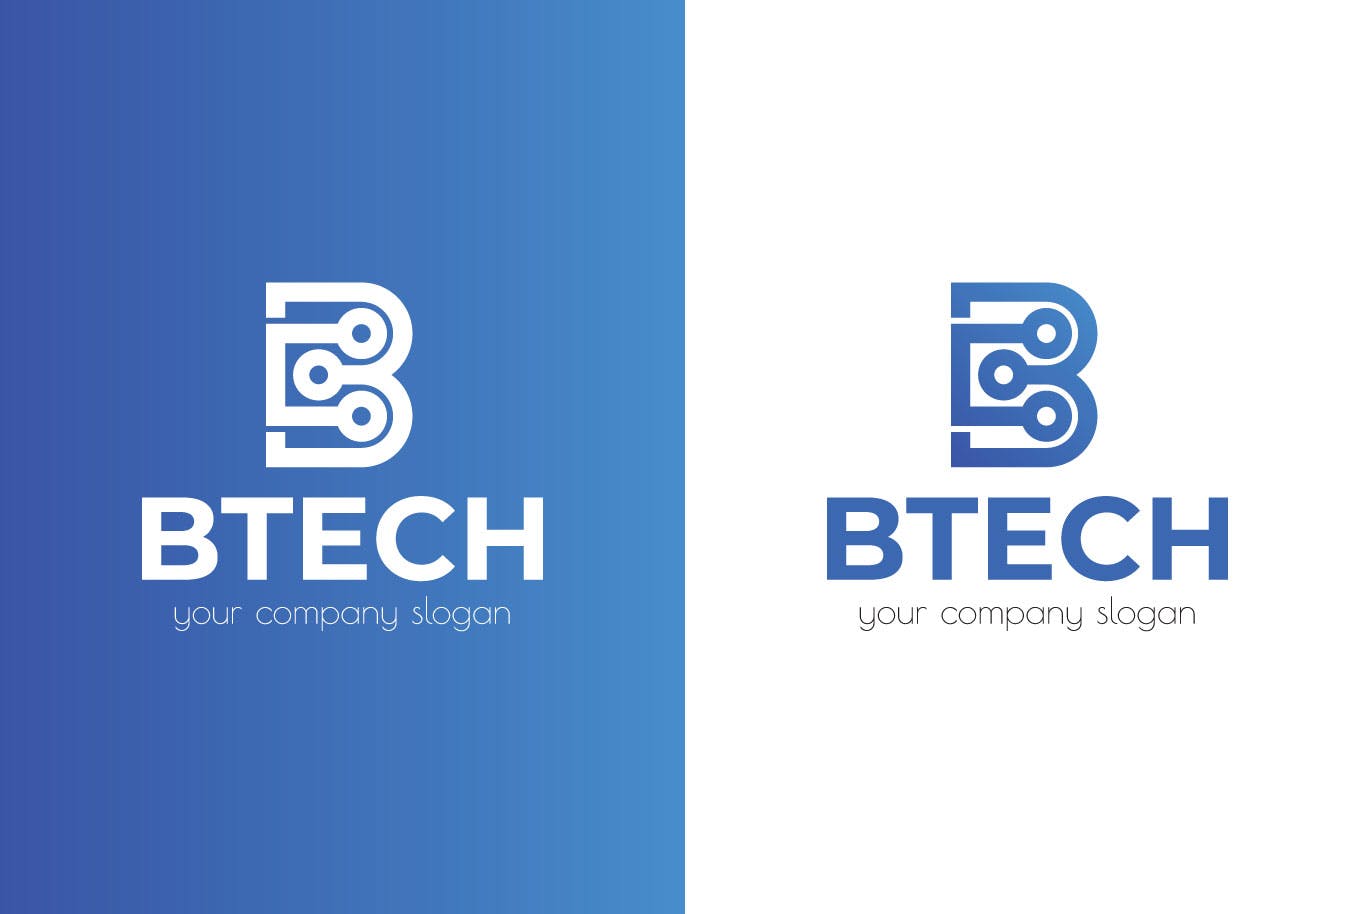 基于B字母图形的企业Logo设计蚂蚁素材精选模板 Letter Based Business Logo Template插图(1)